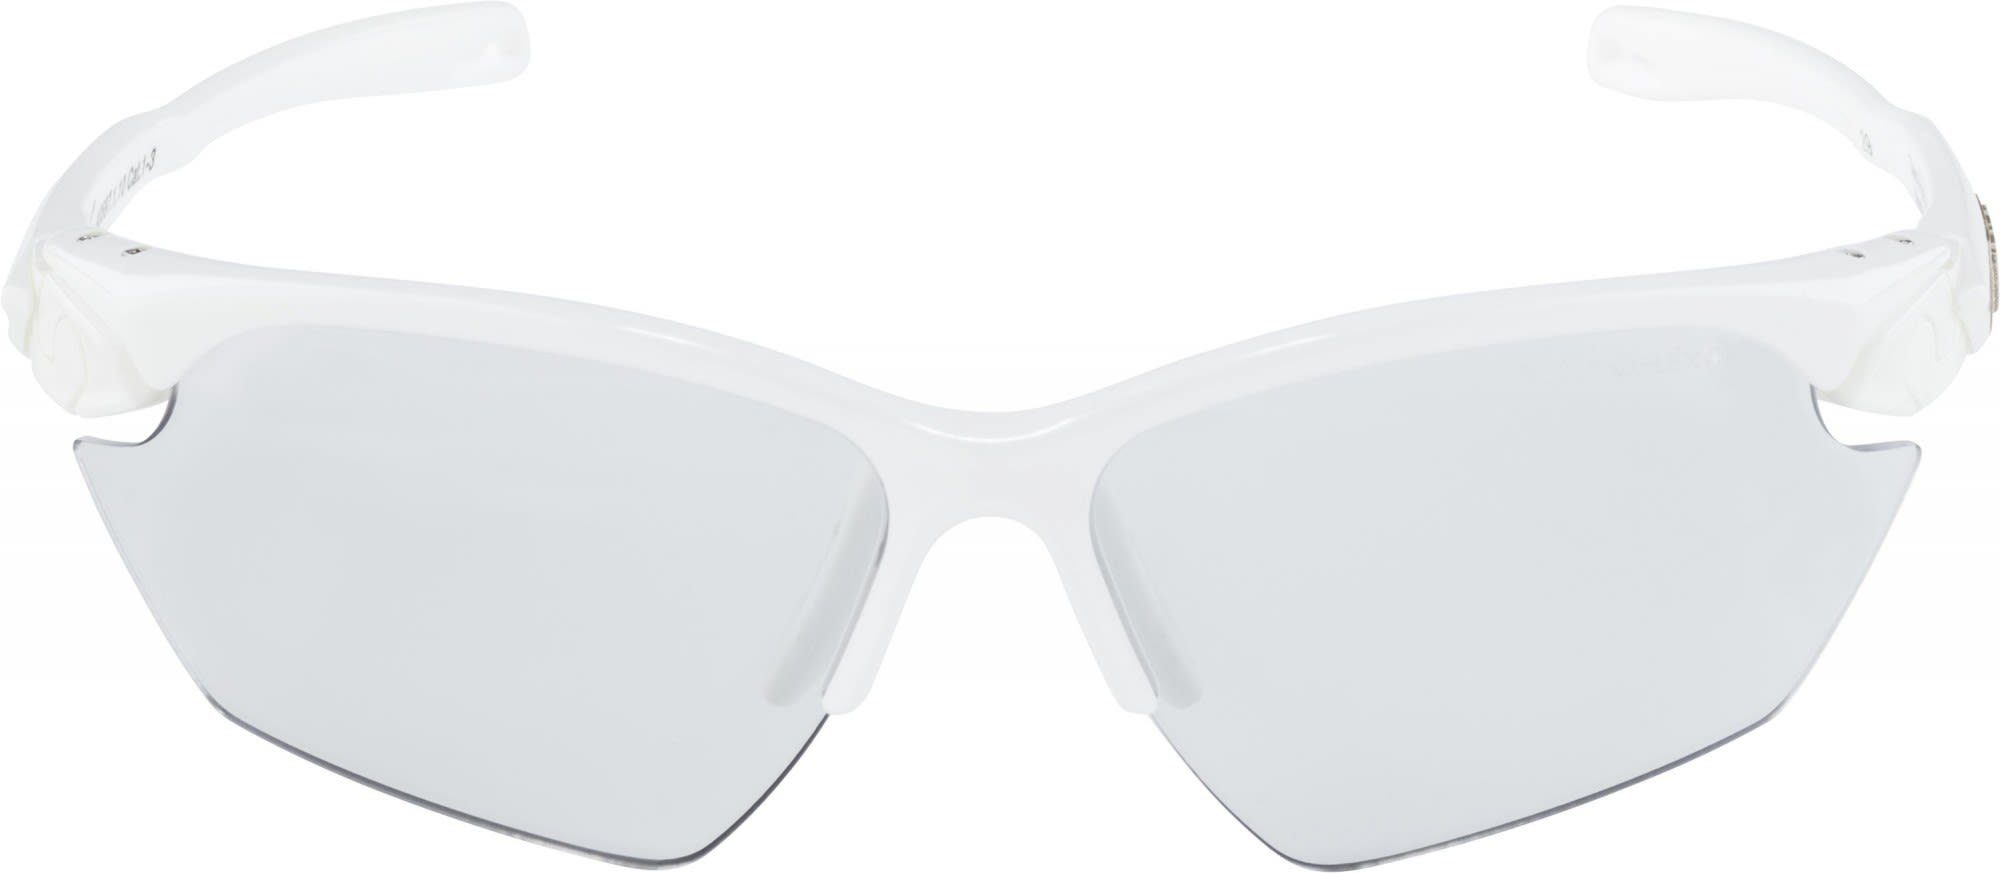 Alpina Sportbrille Alpina Black Accessoires White Twist Five Hr - S V